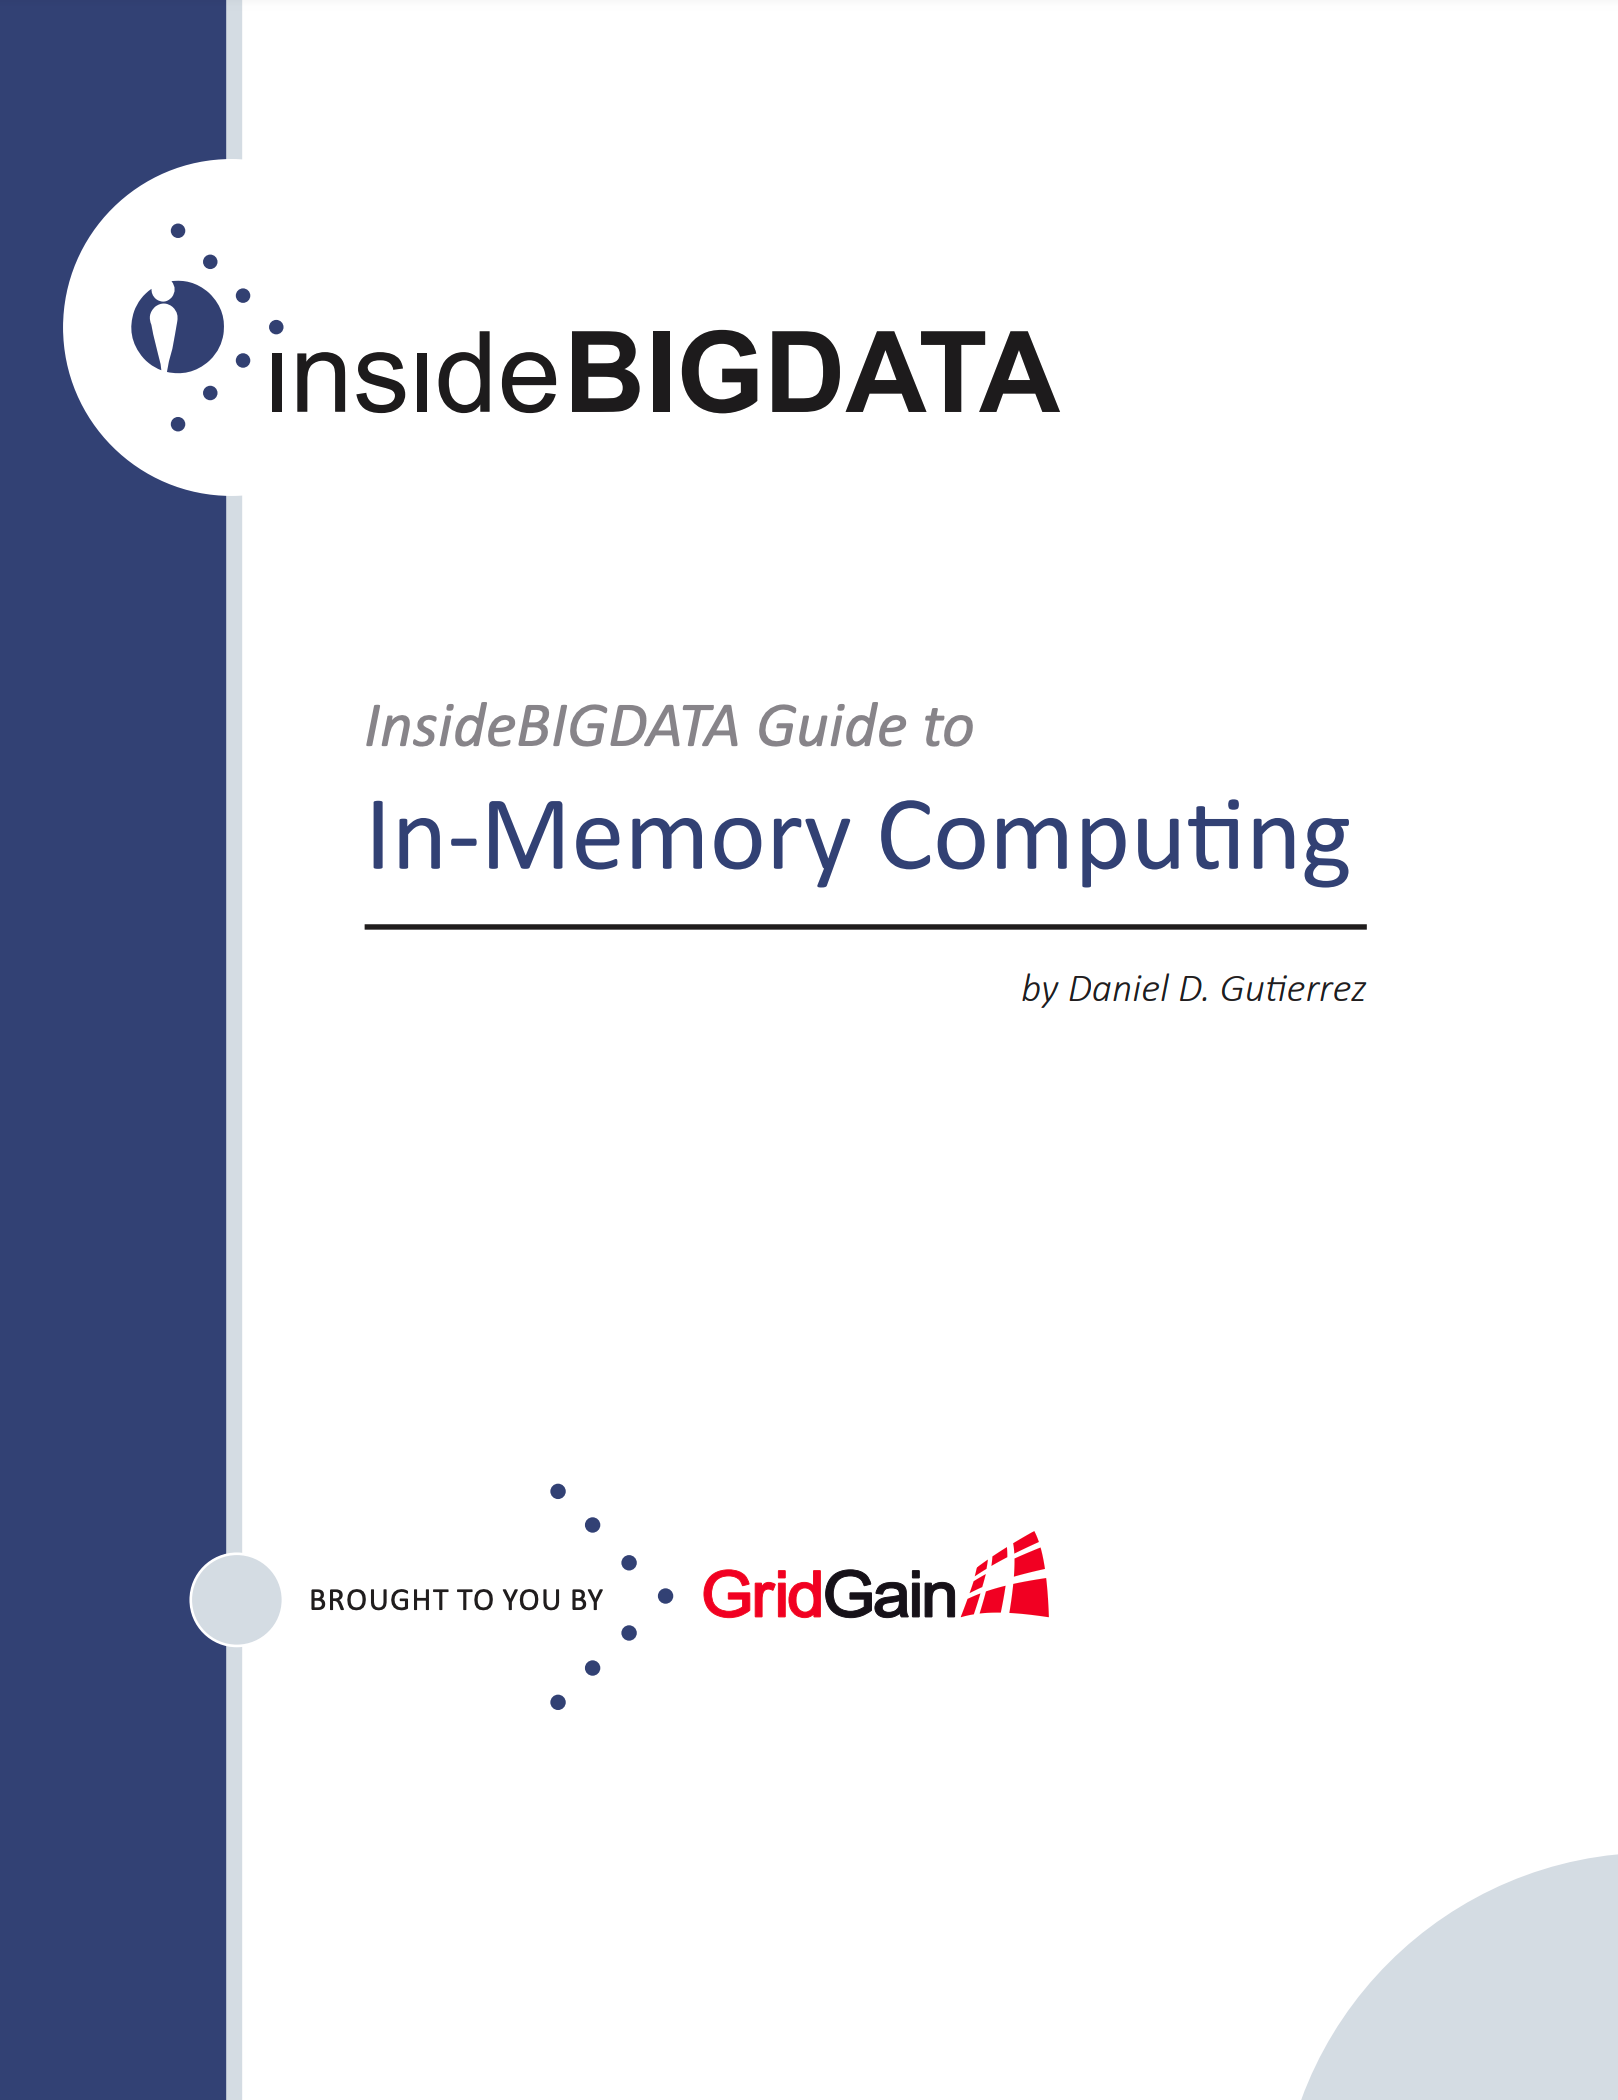 Inside BIGDATA Guide to In-Memory Computing